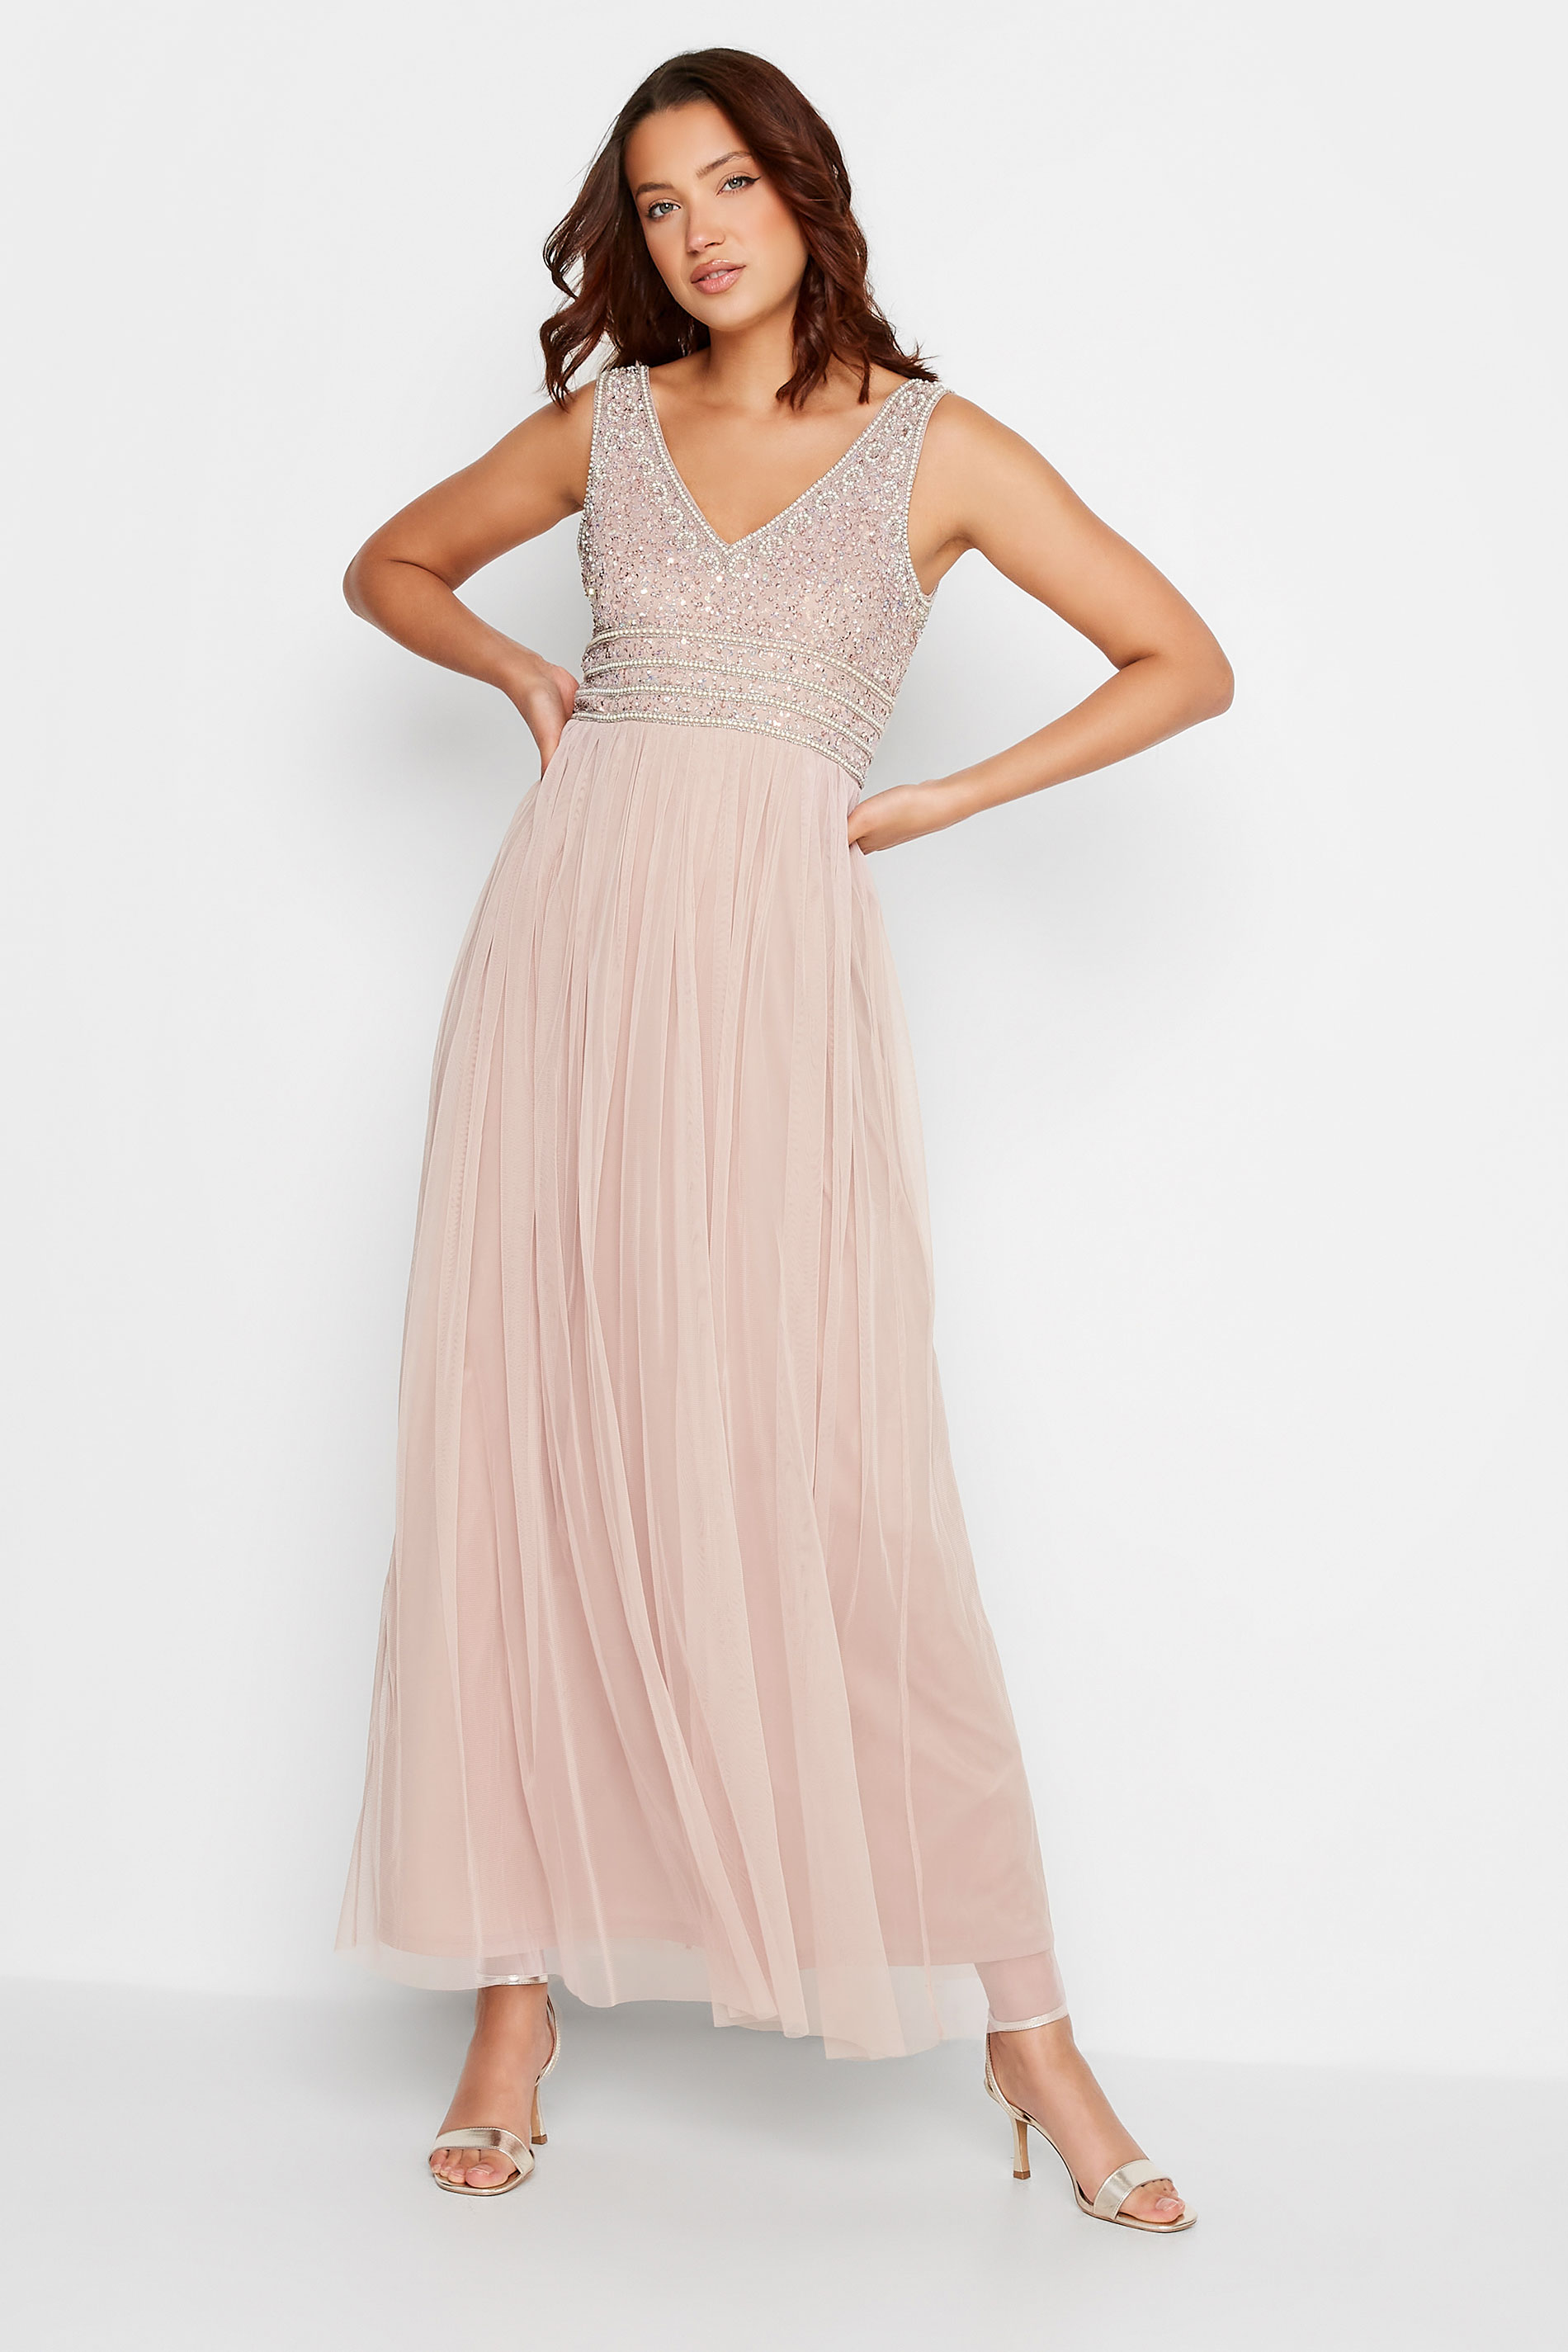 LTS Tall Women's Blush Pink Sequin Hand Embellished Maxi Dress | Long Tall Sally 1